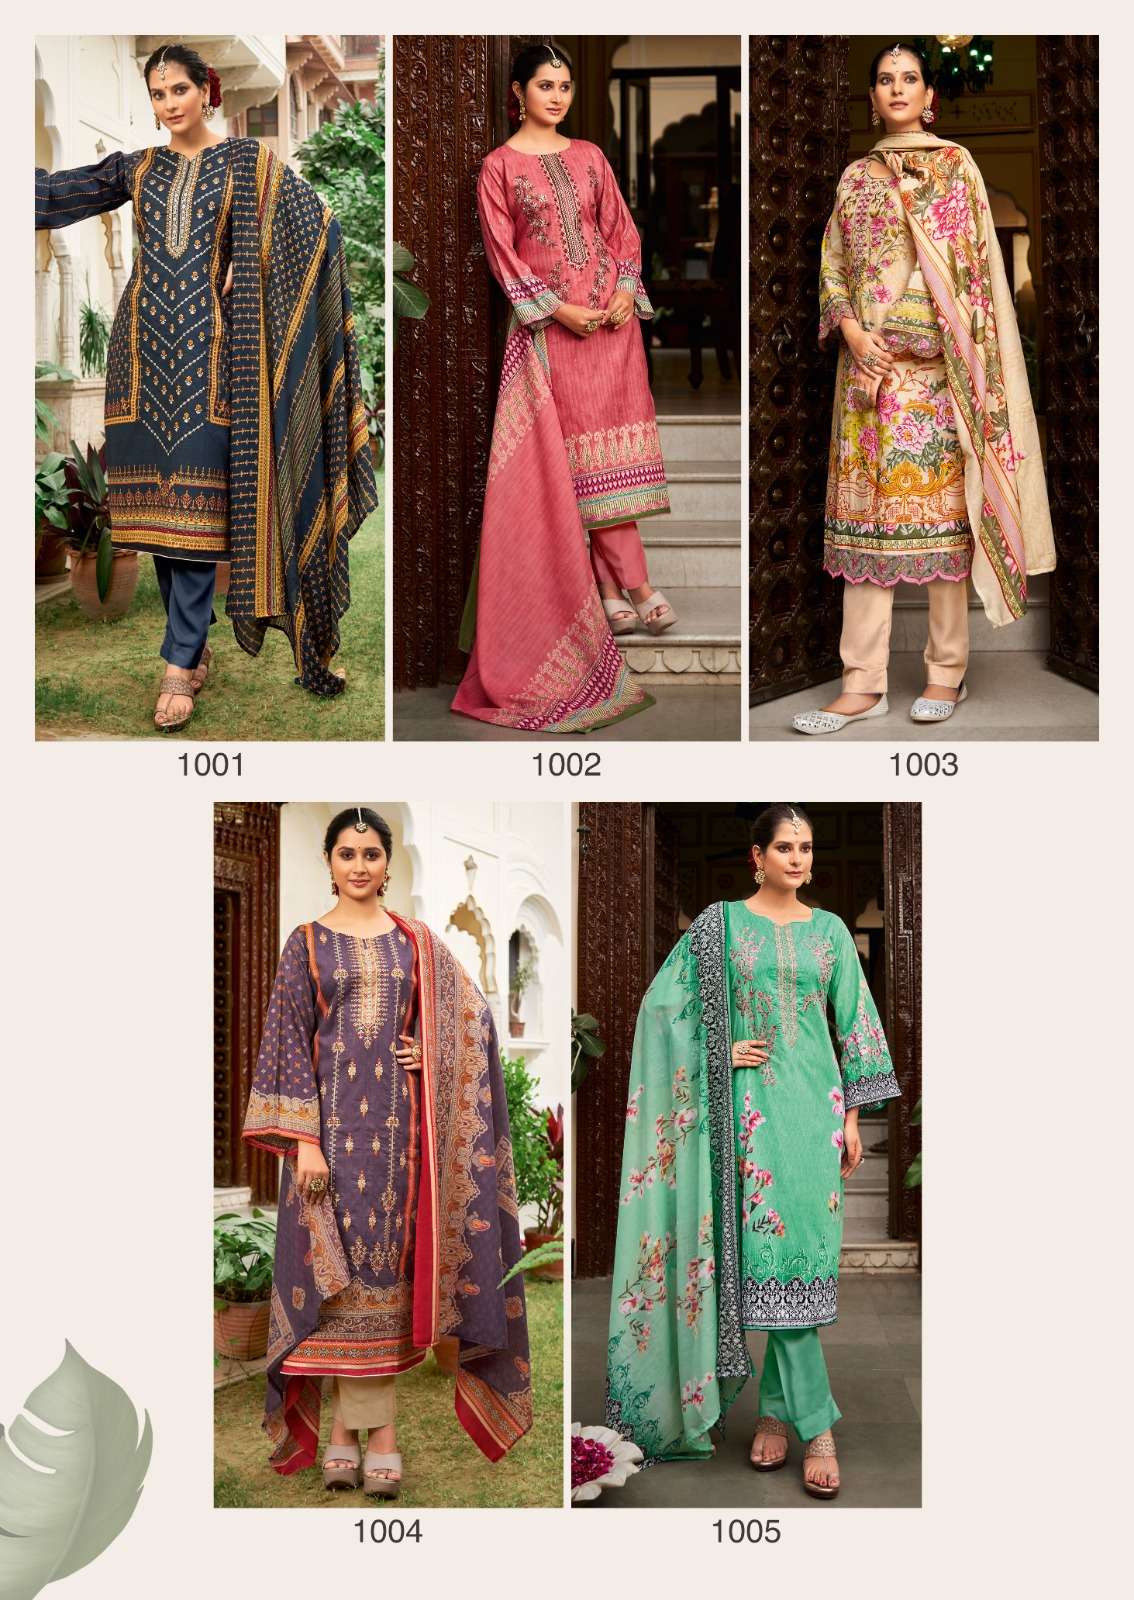 Levisha Eshaan Digital Style Cemric Cotton Dress Material Wholesale catalog